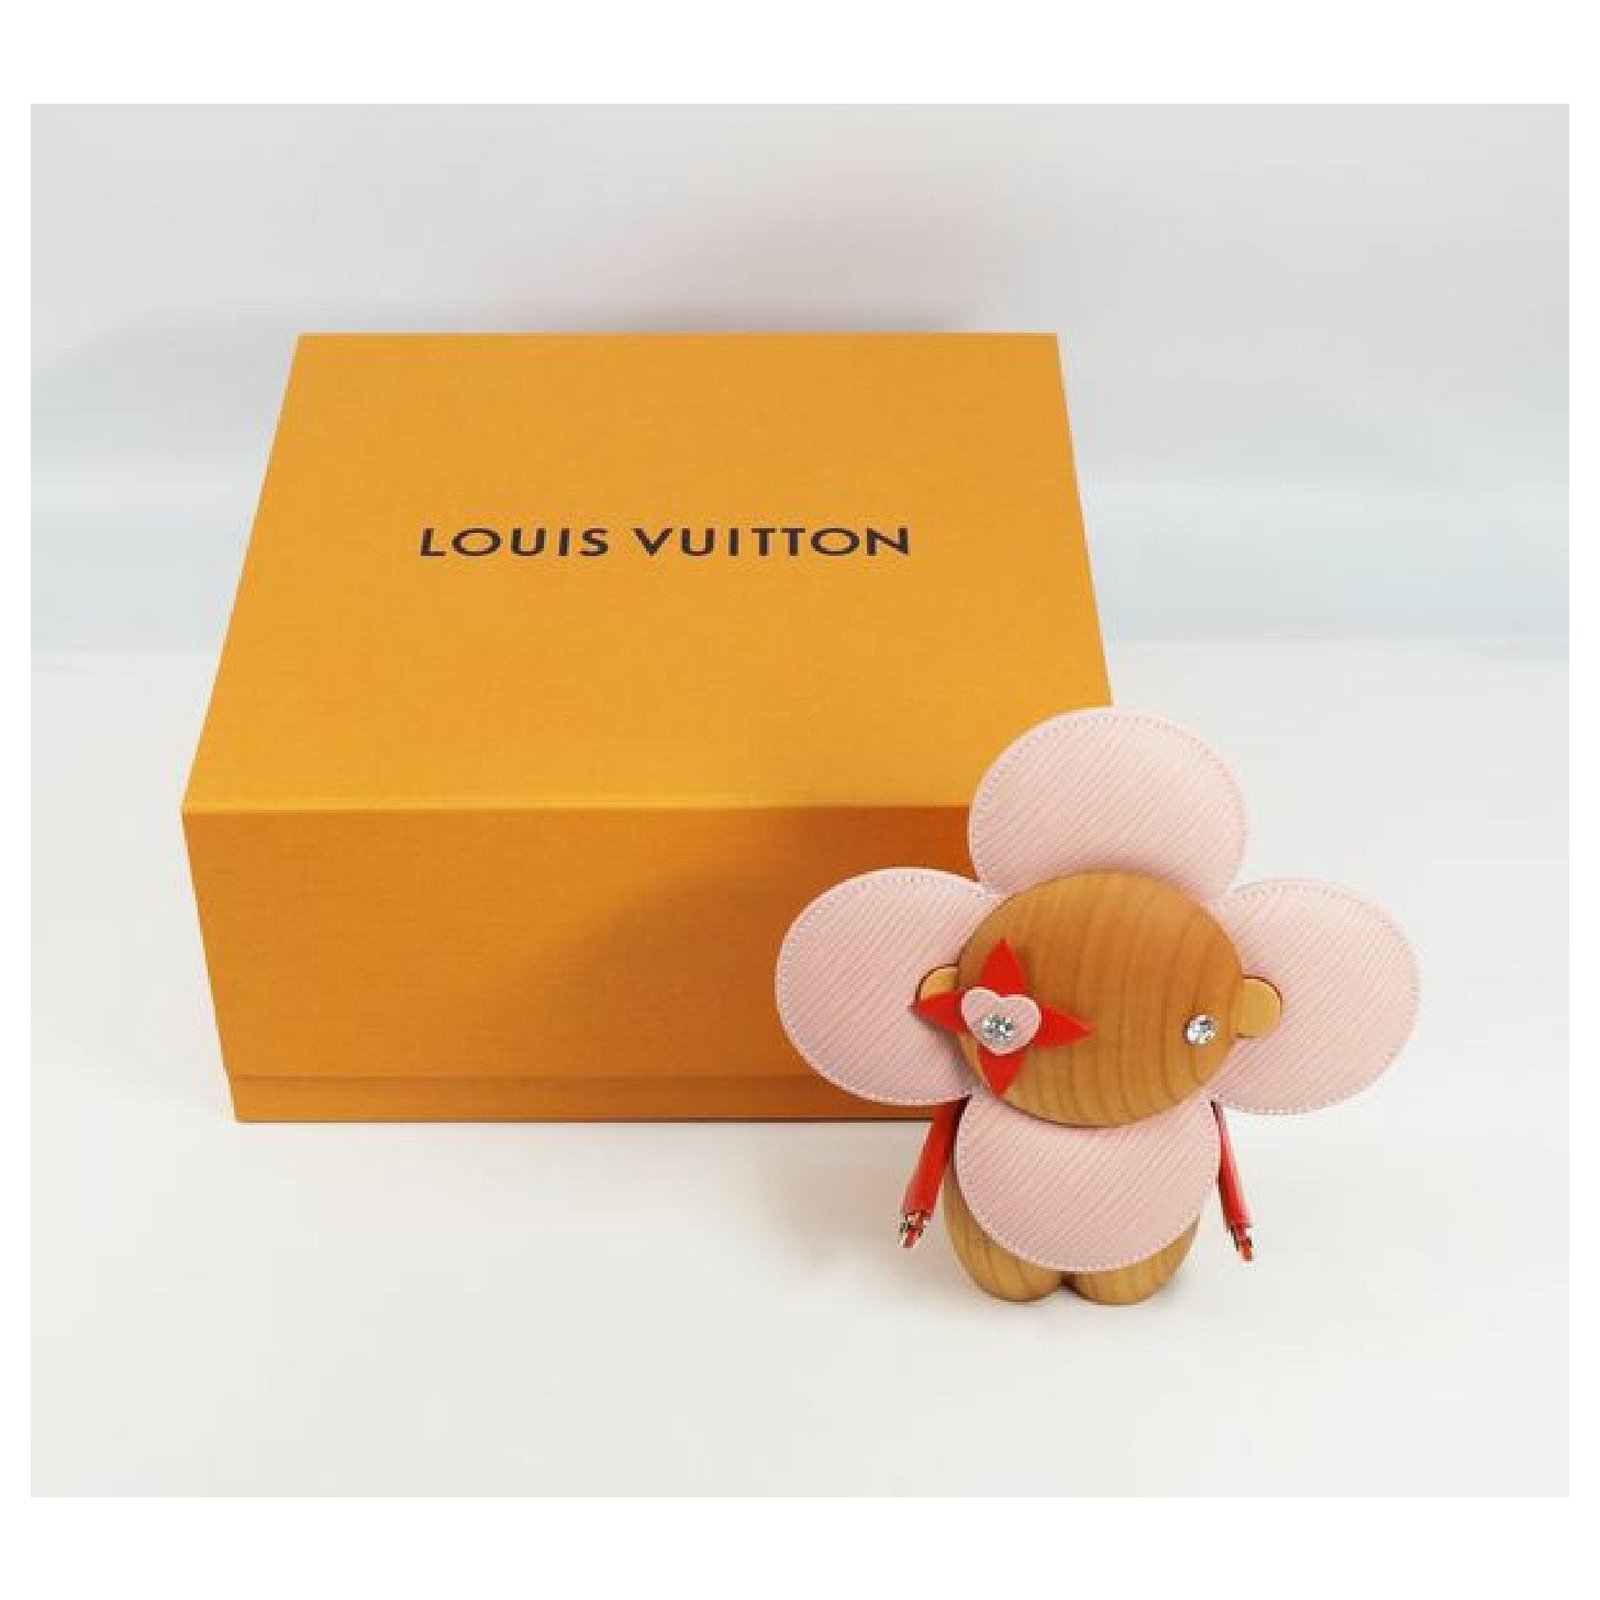 LOUIS VUITTON GI0259 Epi Vivienne interior object Epi Leather / Wood pink